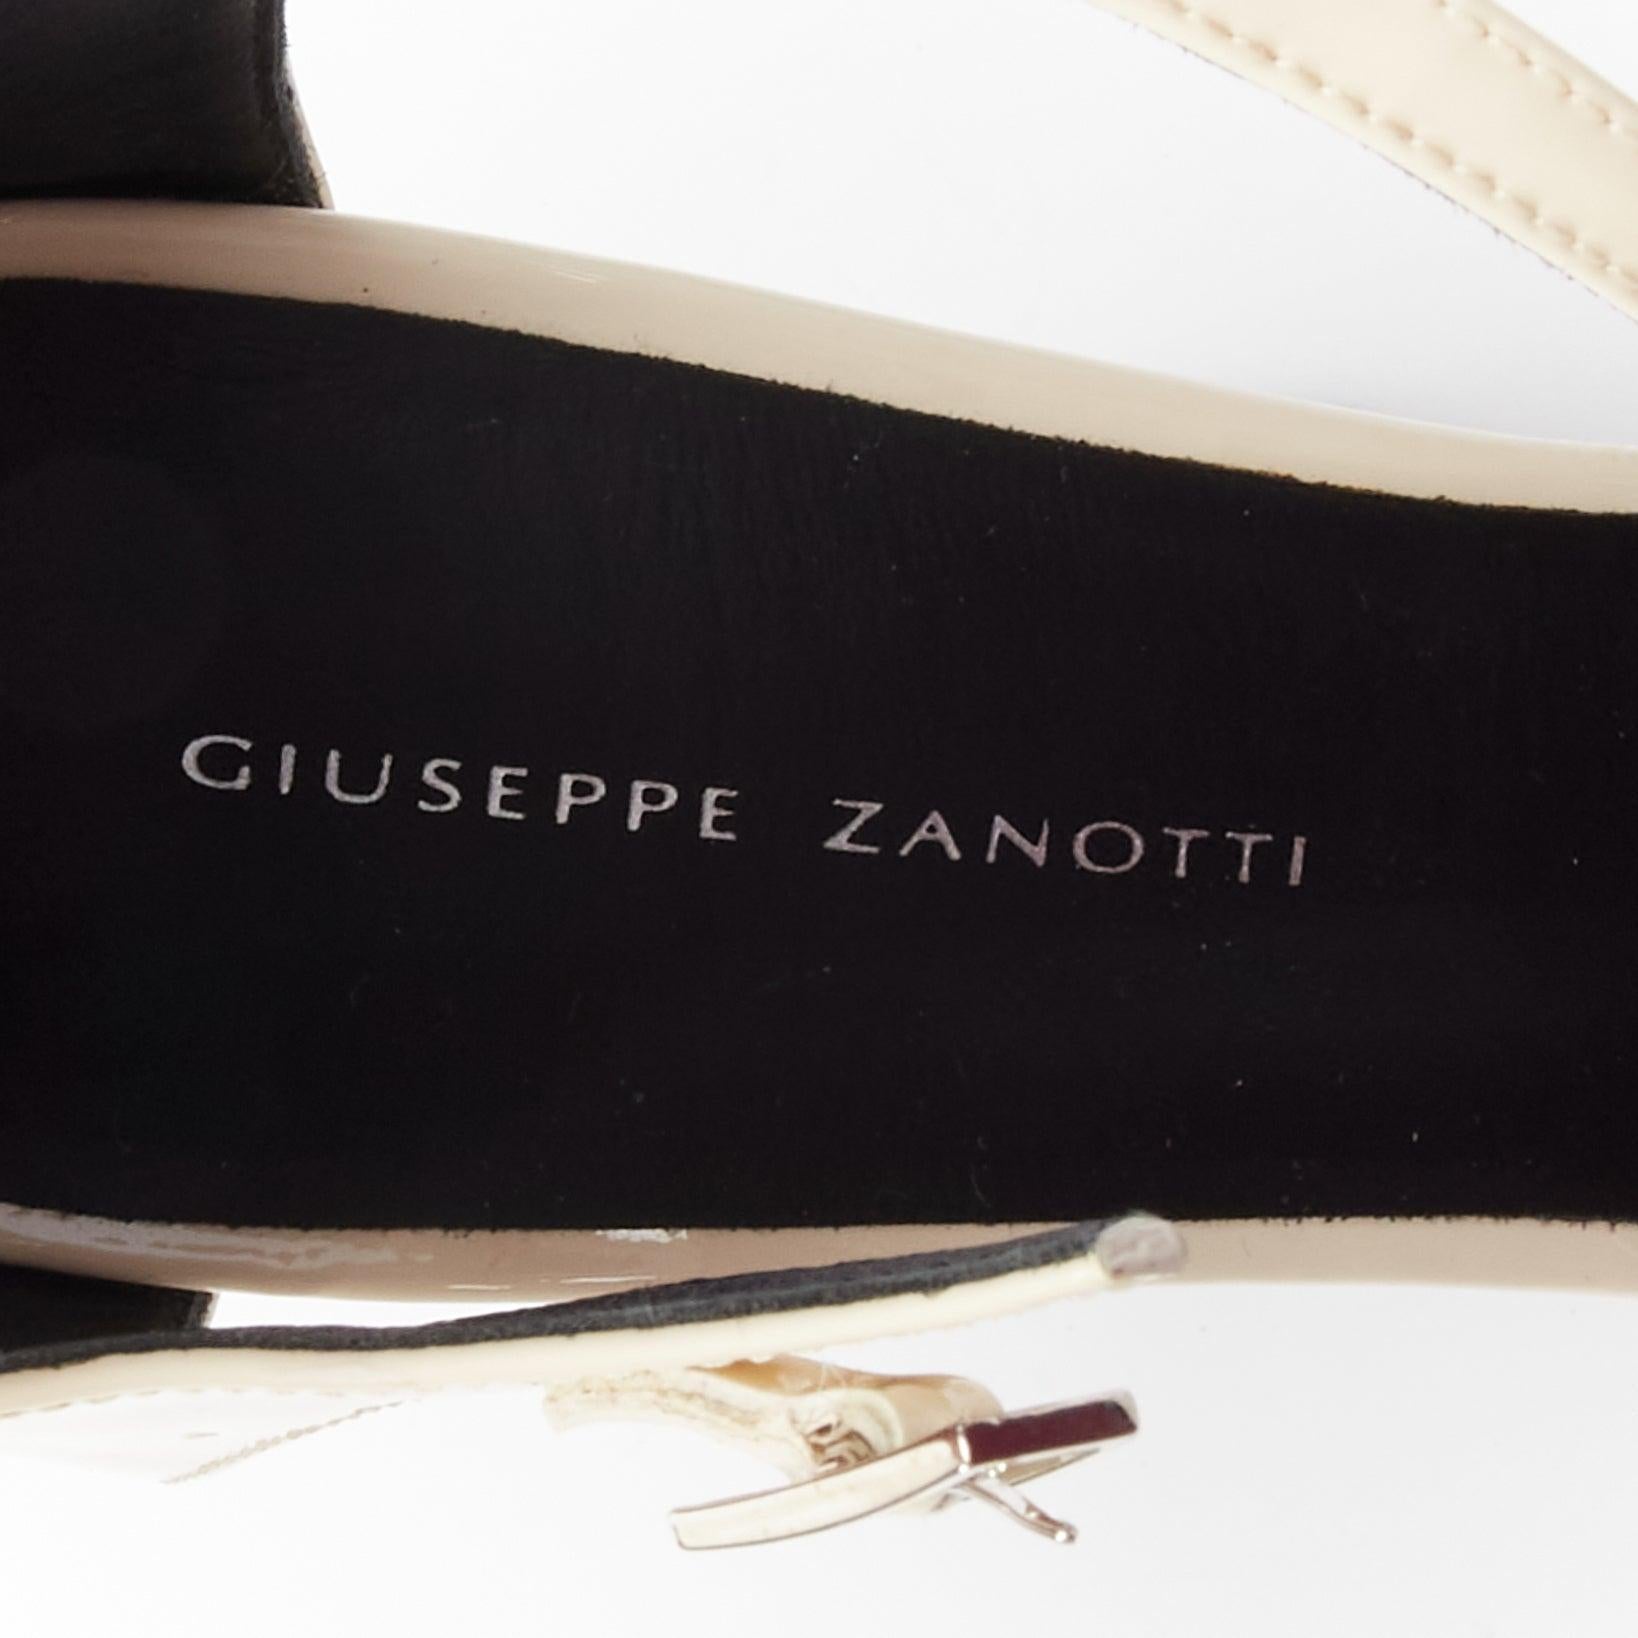 GIUSEPPE ZANOTTI Bebe cream patent leather platform heels EU39 7